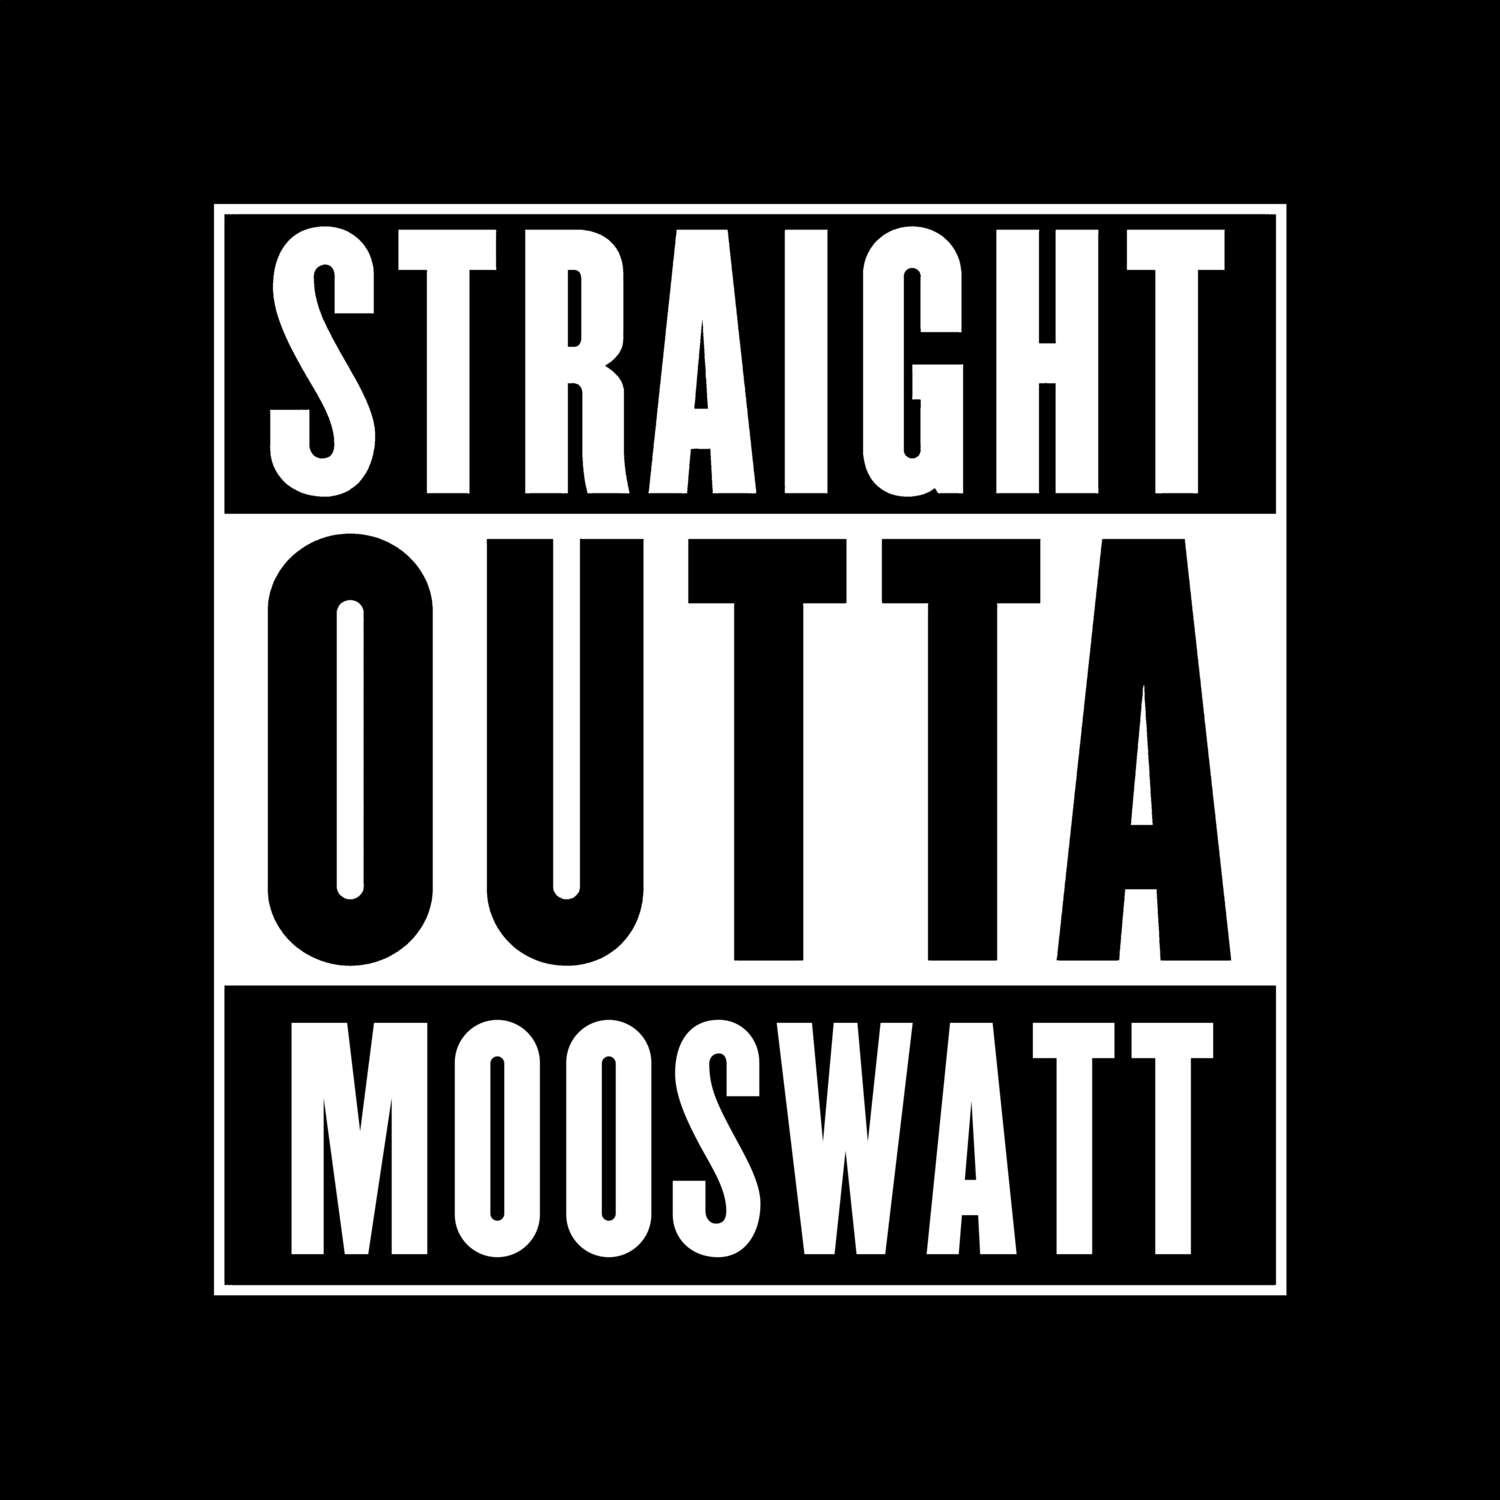 Mooswatt T-Shirt »Straight Outta«